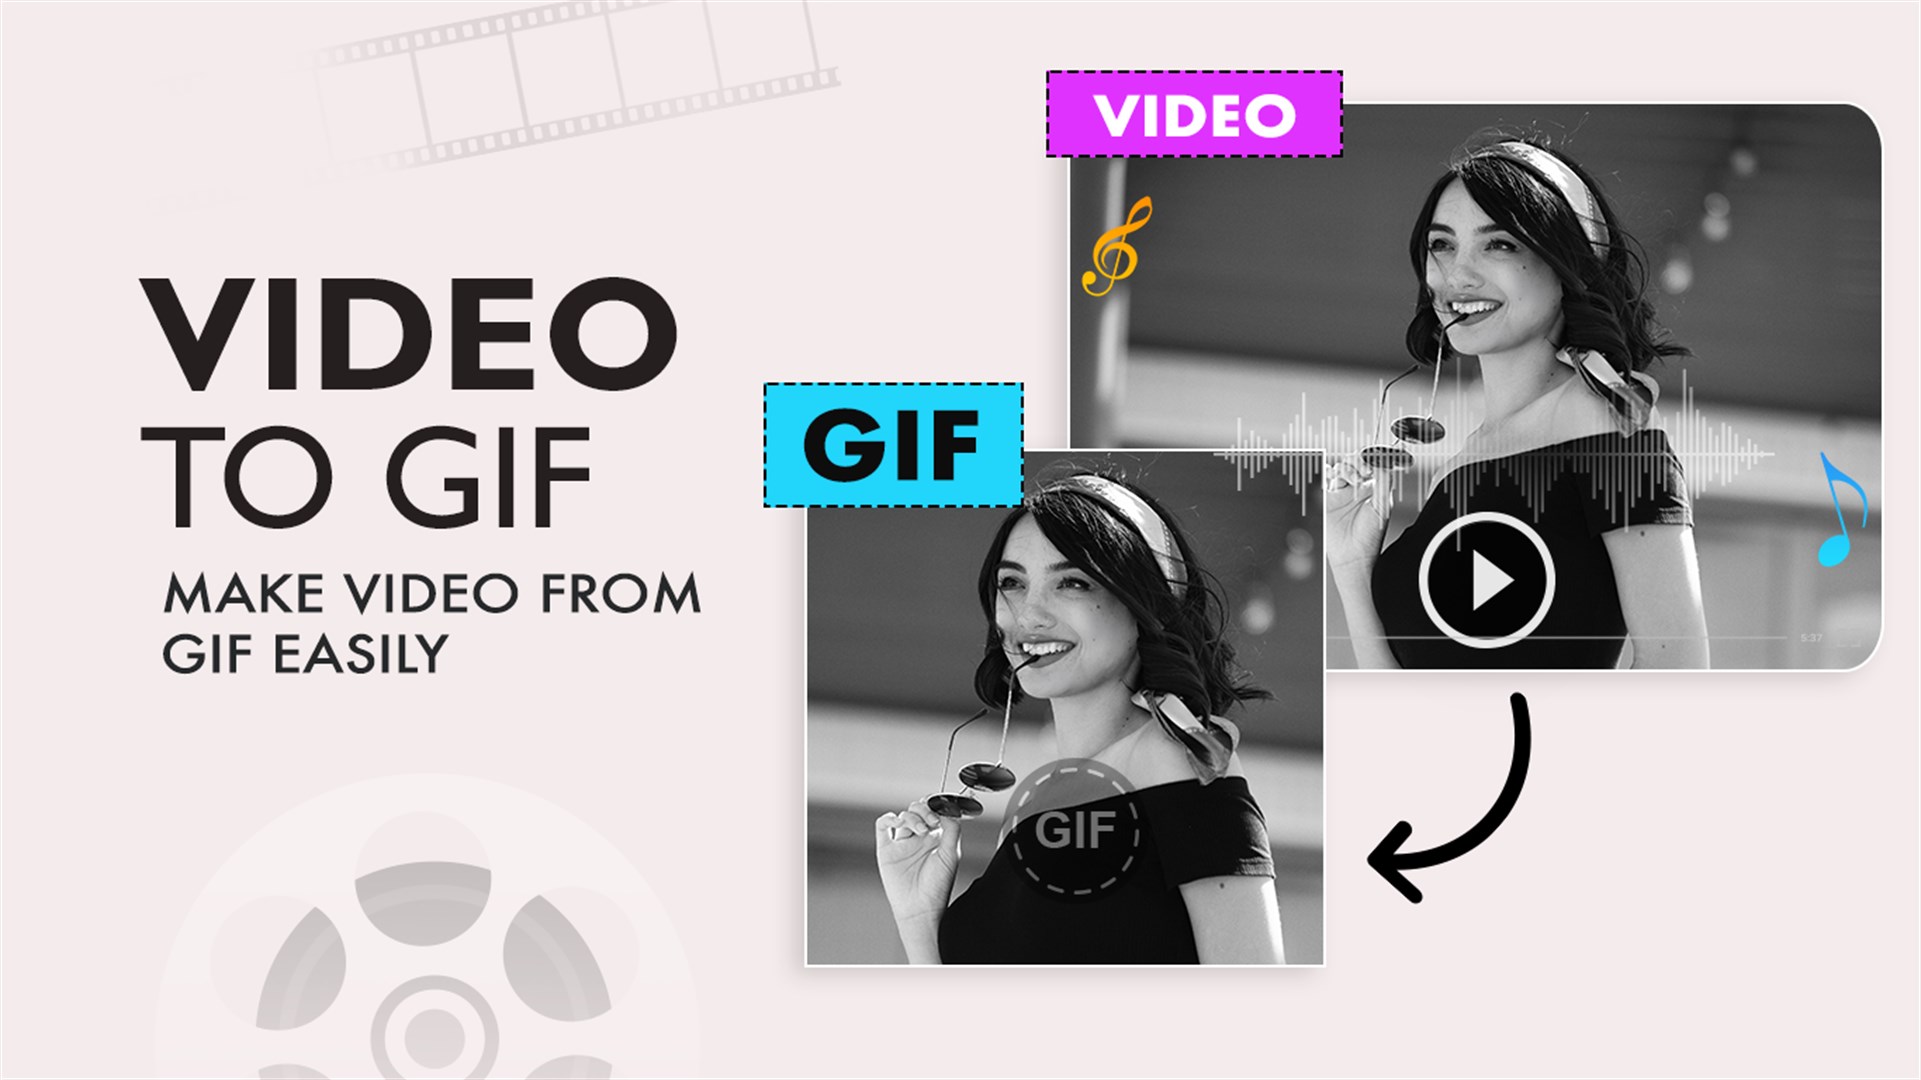 Photo to GIF - GIF Maker - Microsoft Apps